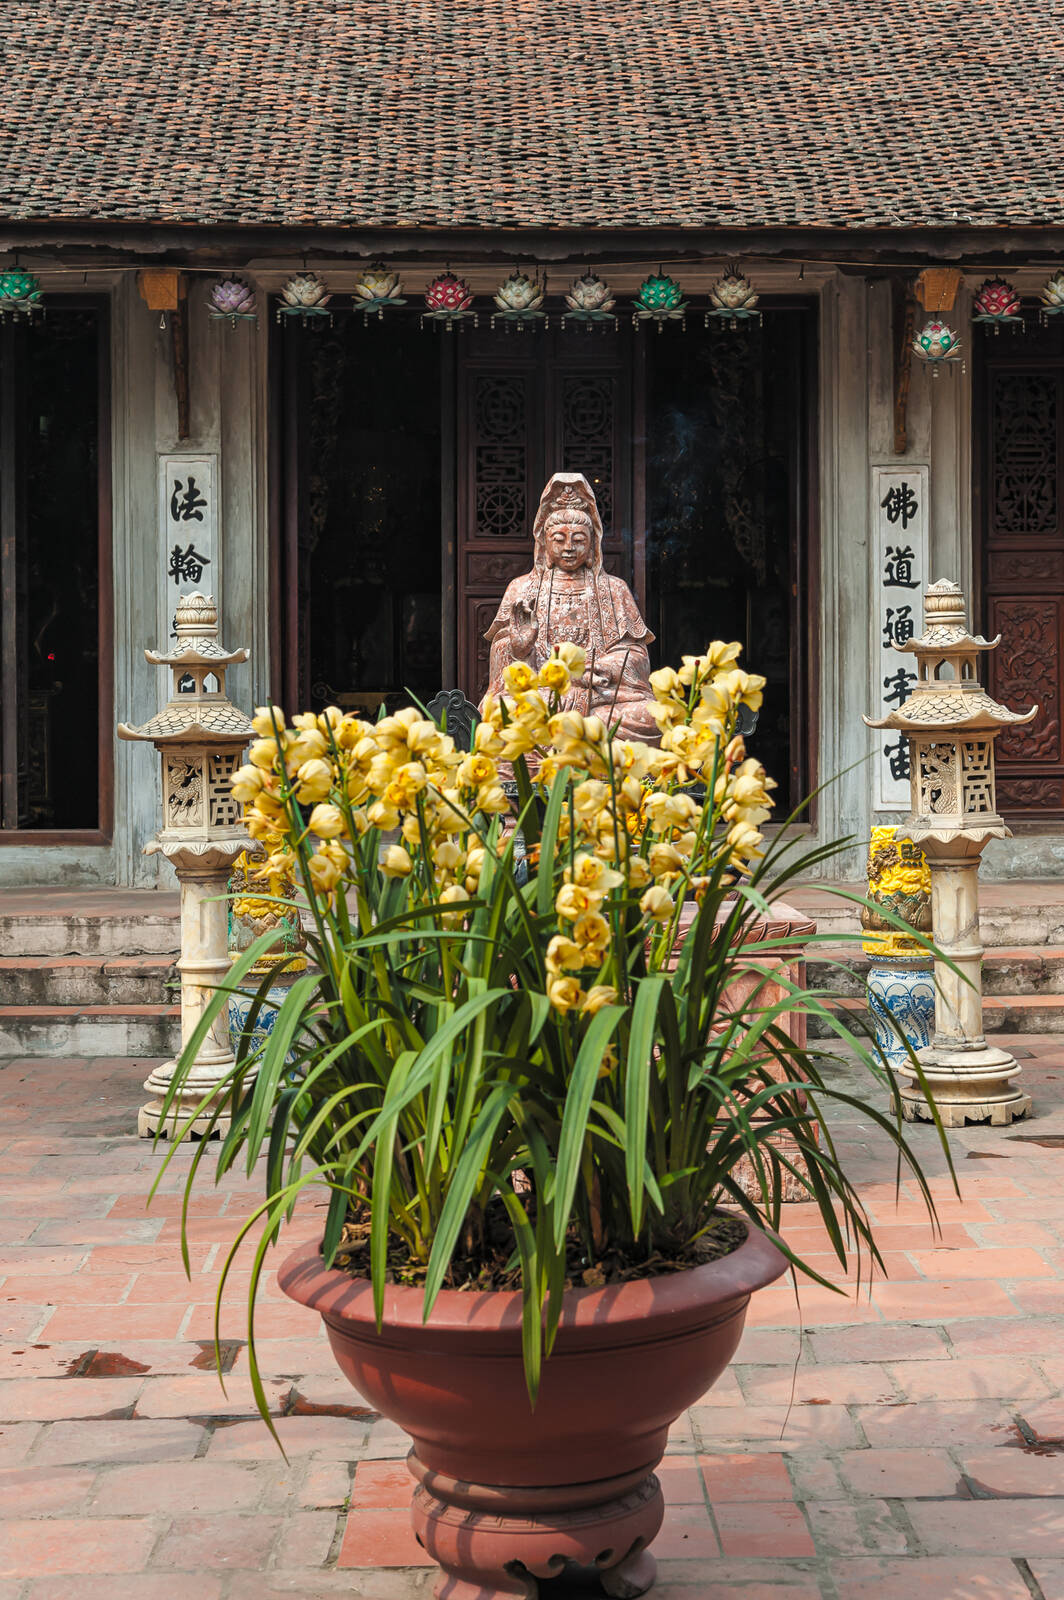 Image of Chua Dien Huu Pagoda by Sue Wolfe